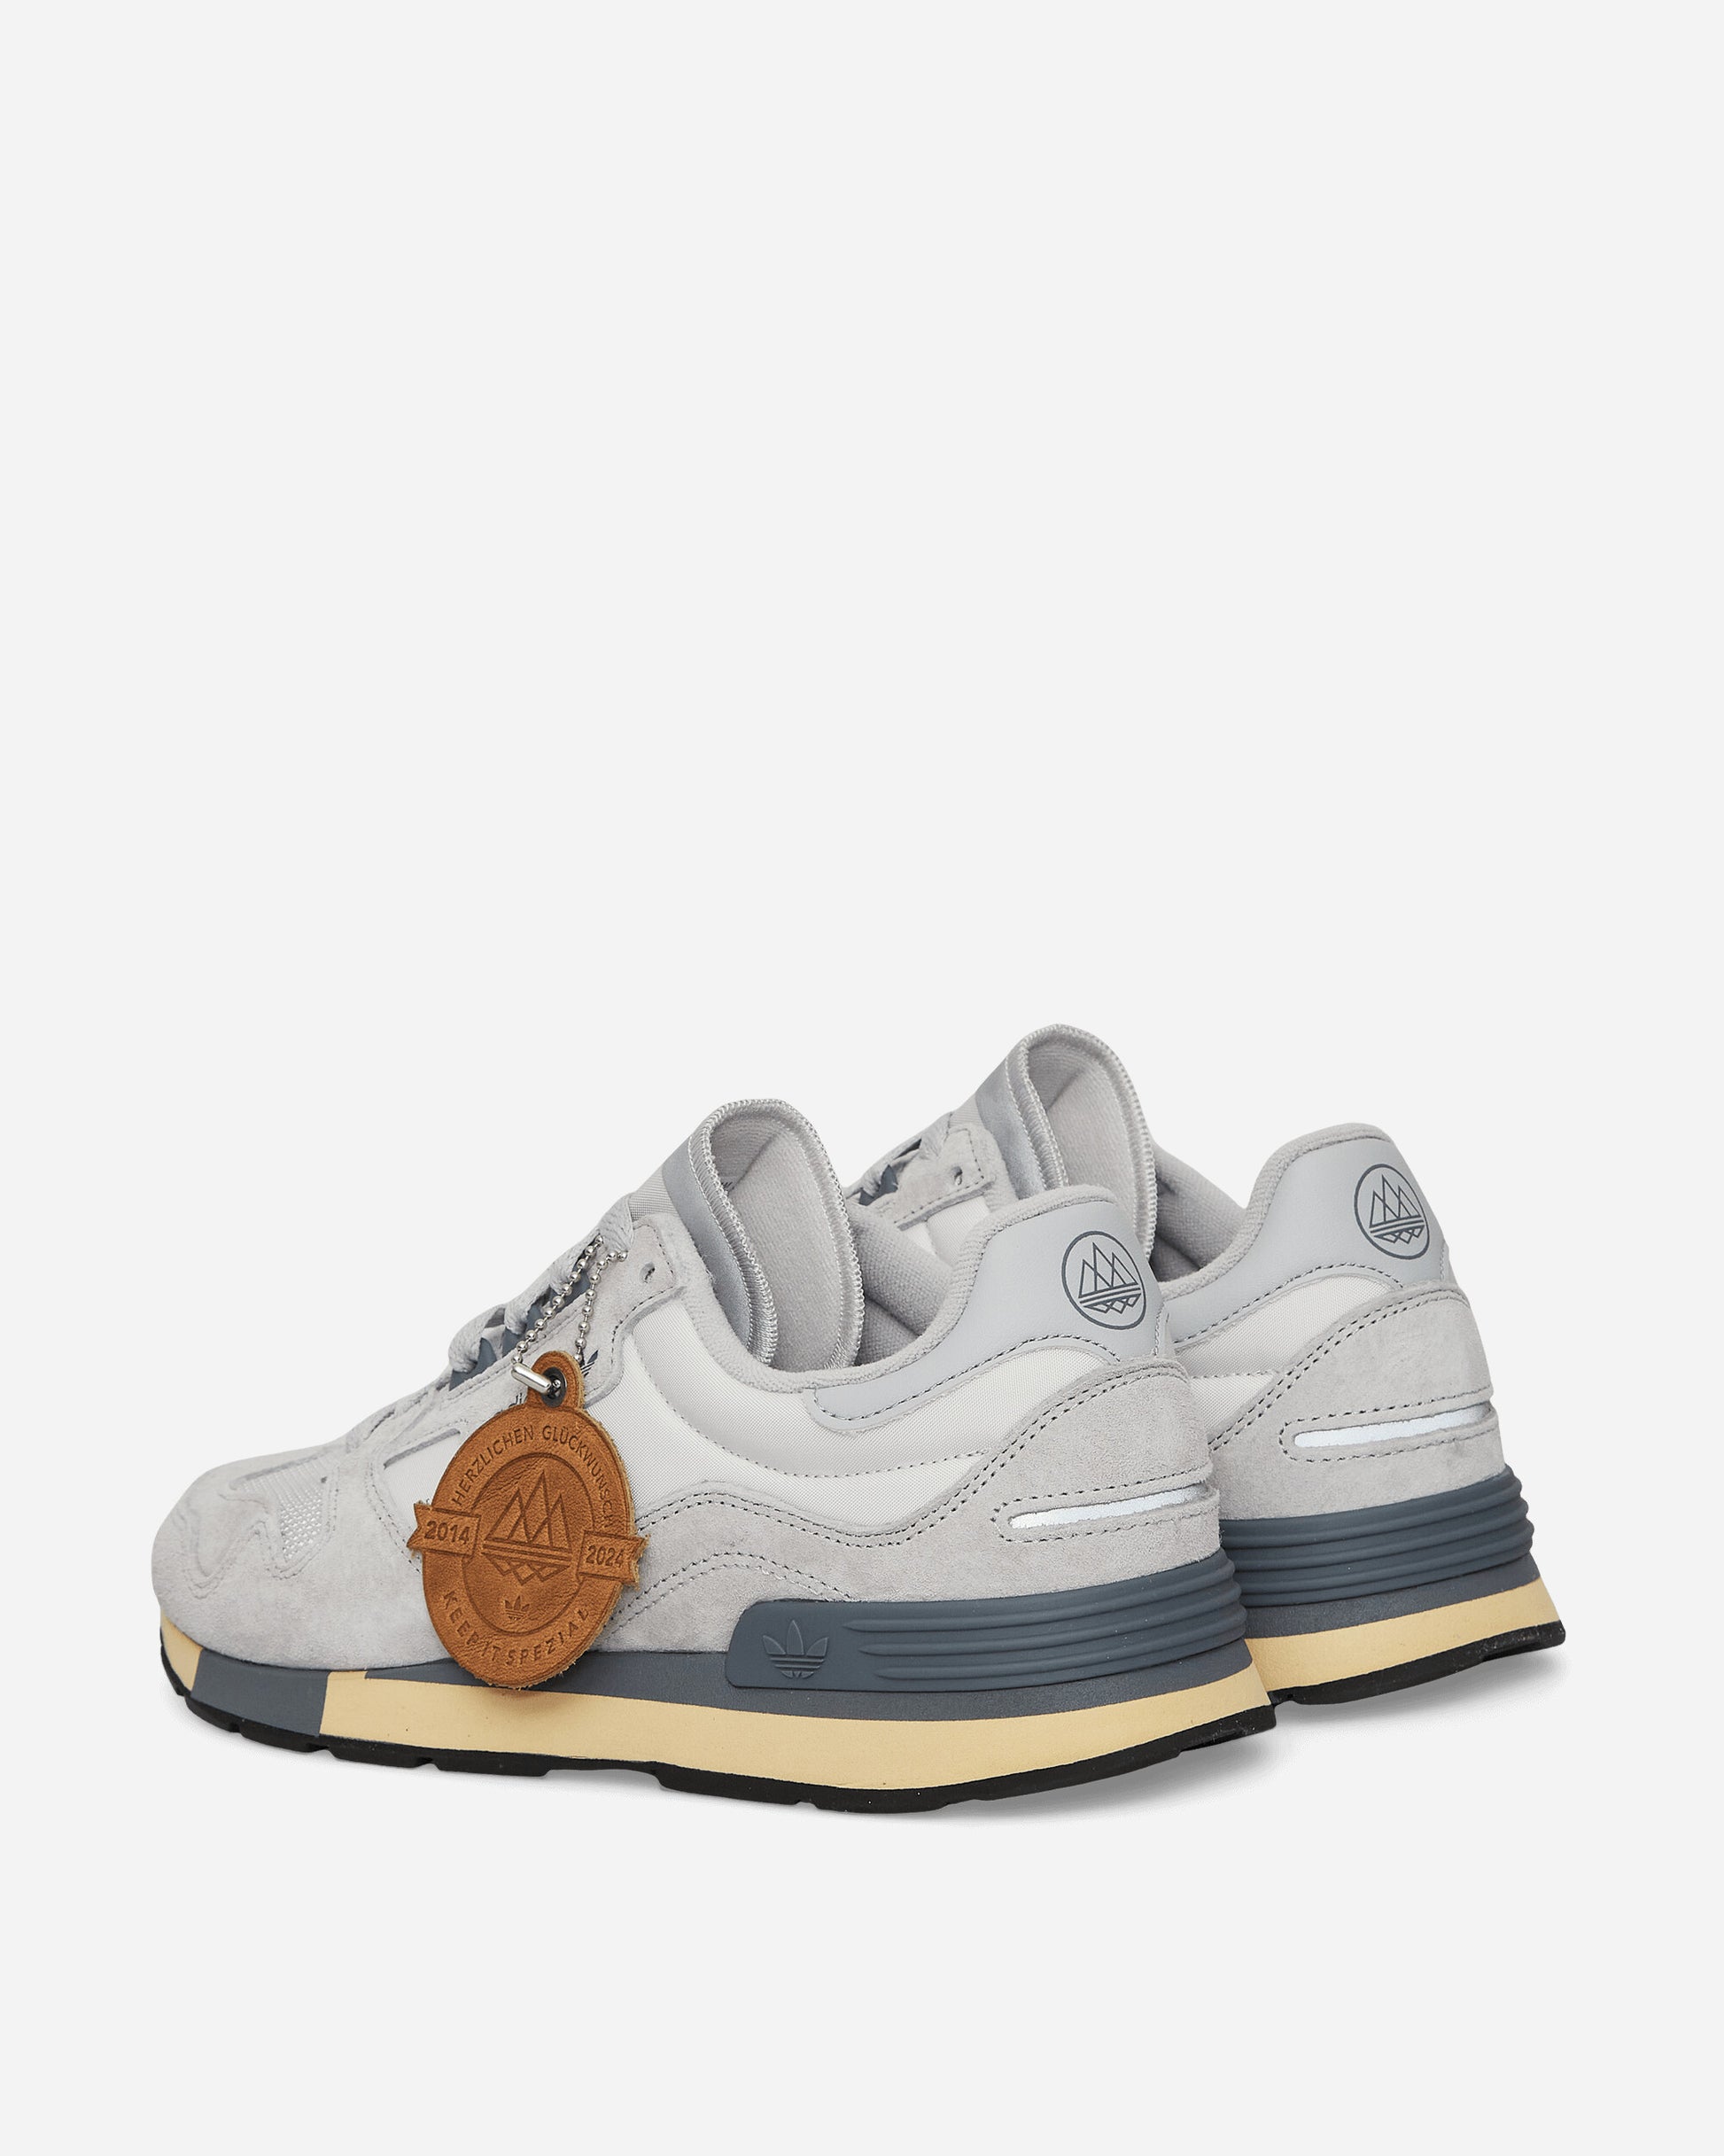 adidas Whitworth Spzl Grey One/Grey Two Sneakers Low ID3513 001